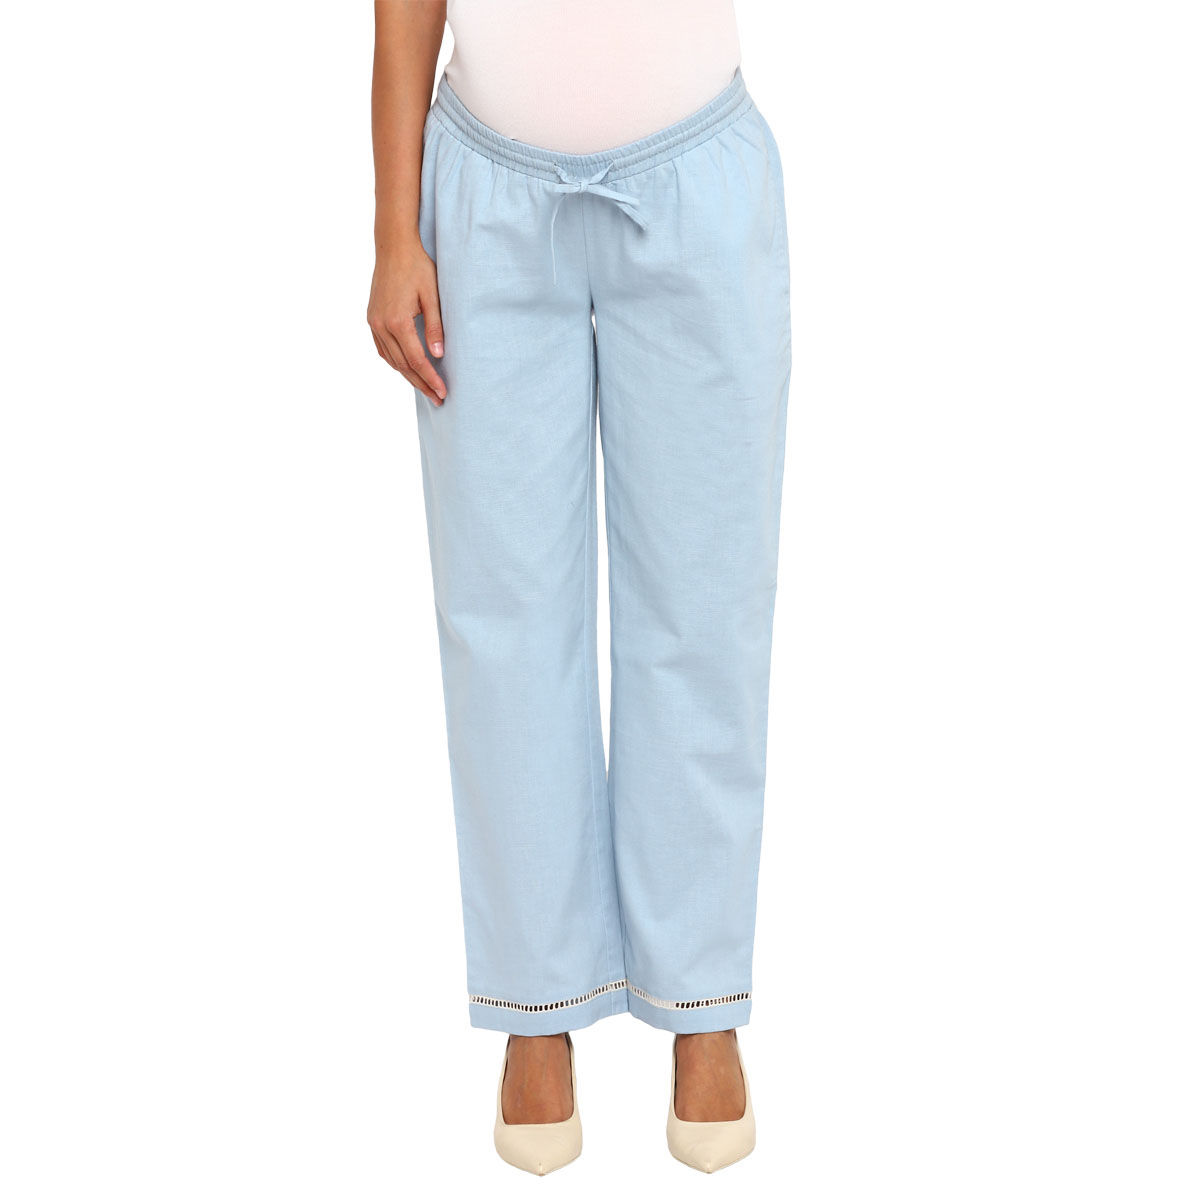 Buy Easy Feed Women's Regular Fit Grey Pants M at Amazon.in